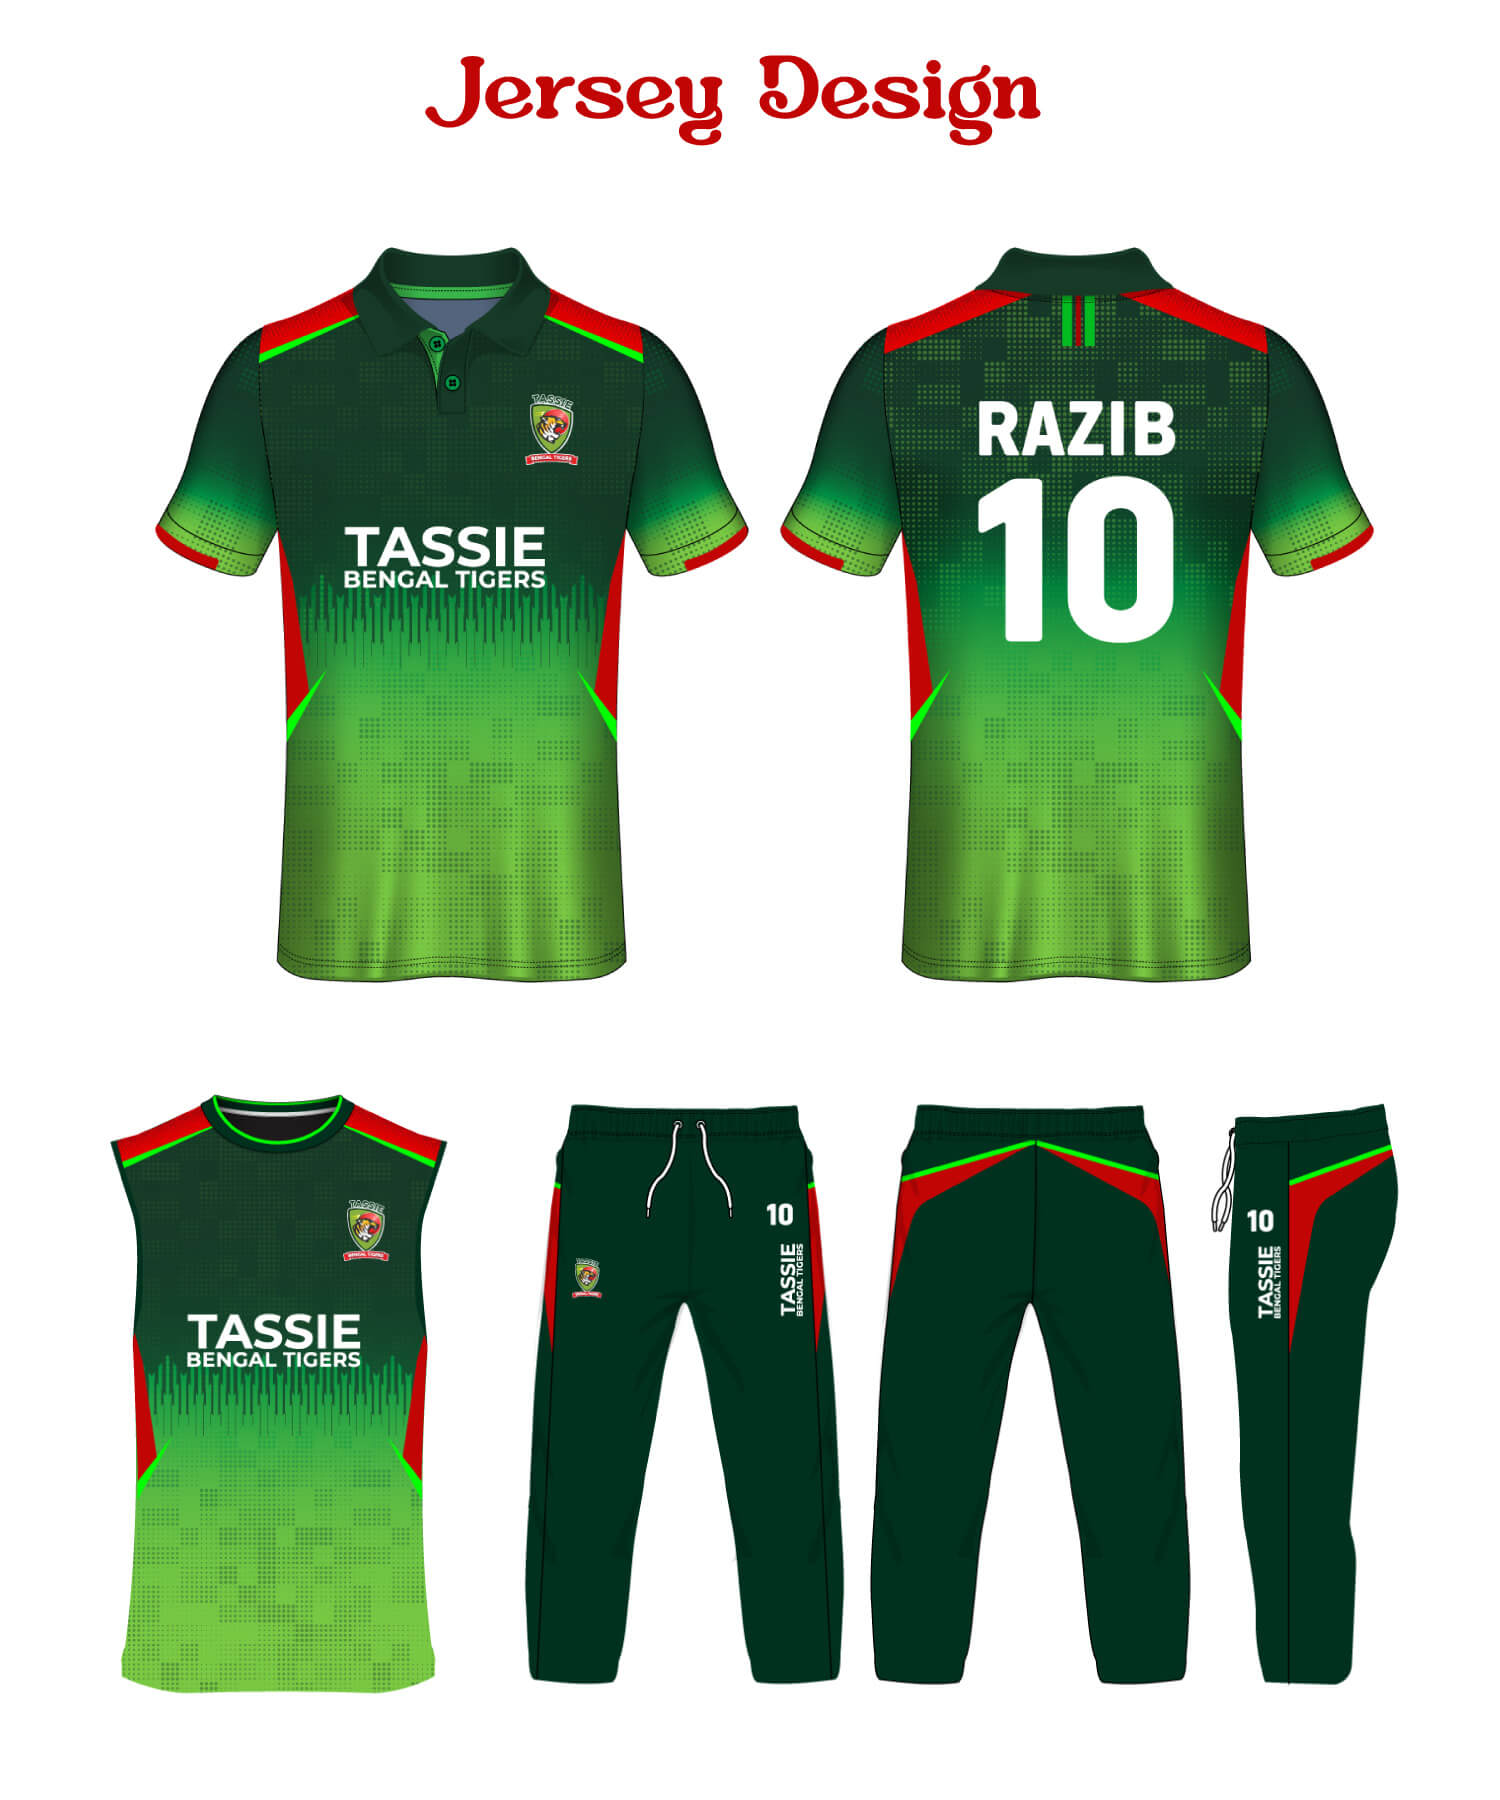 Cricket Jersey Design